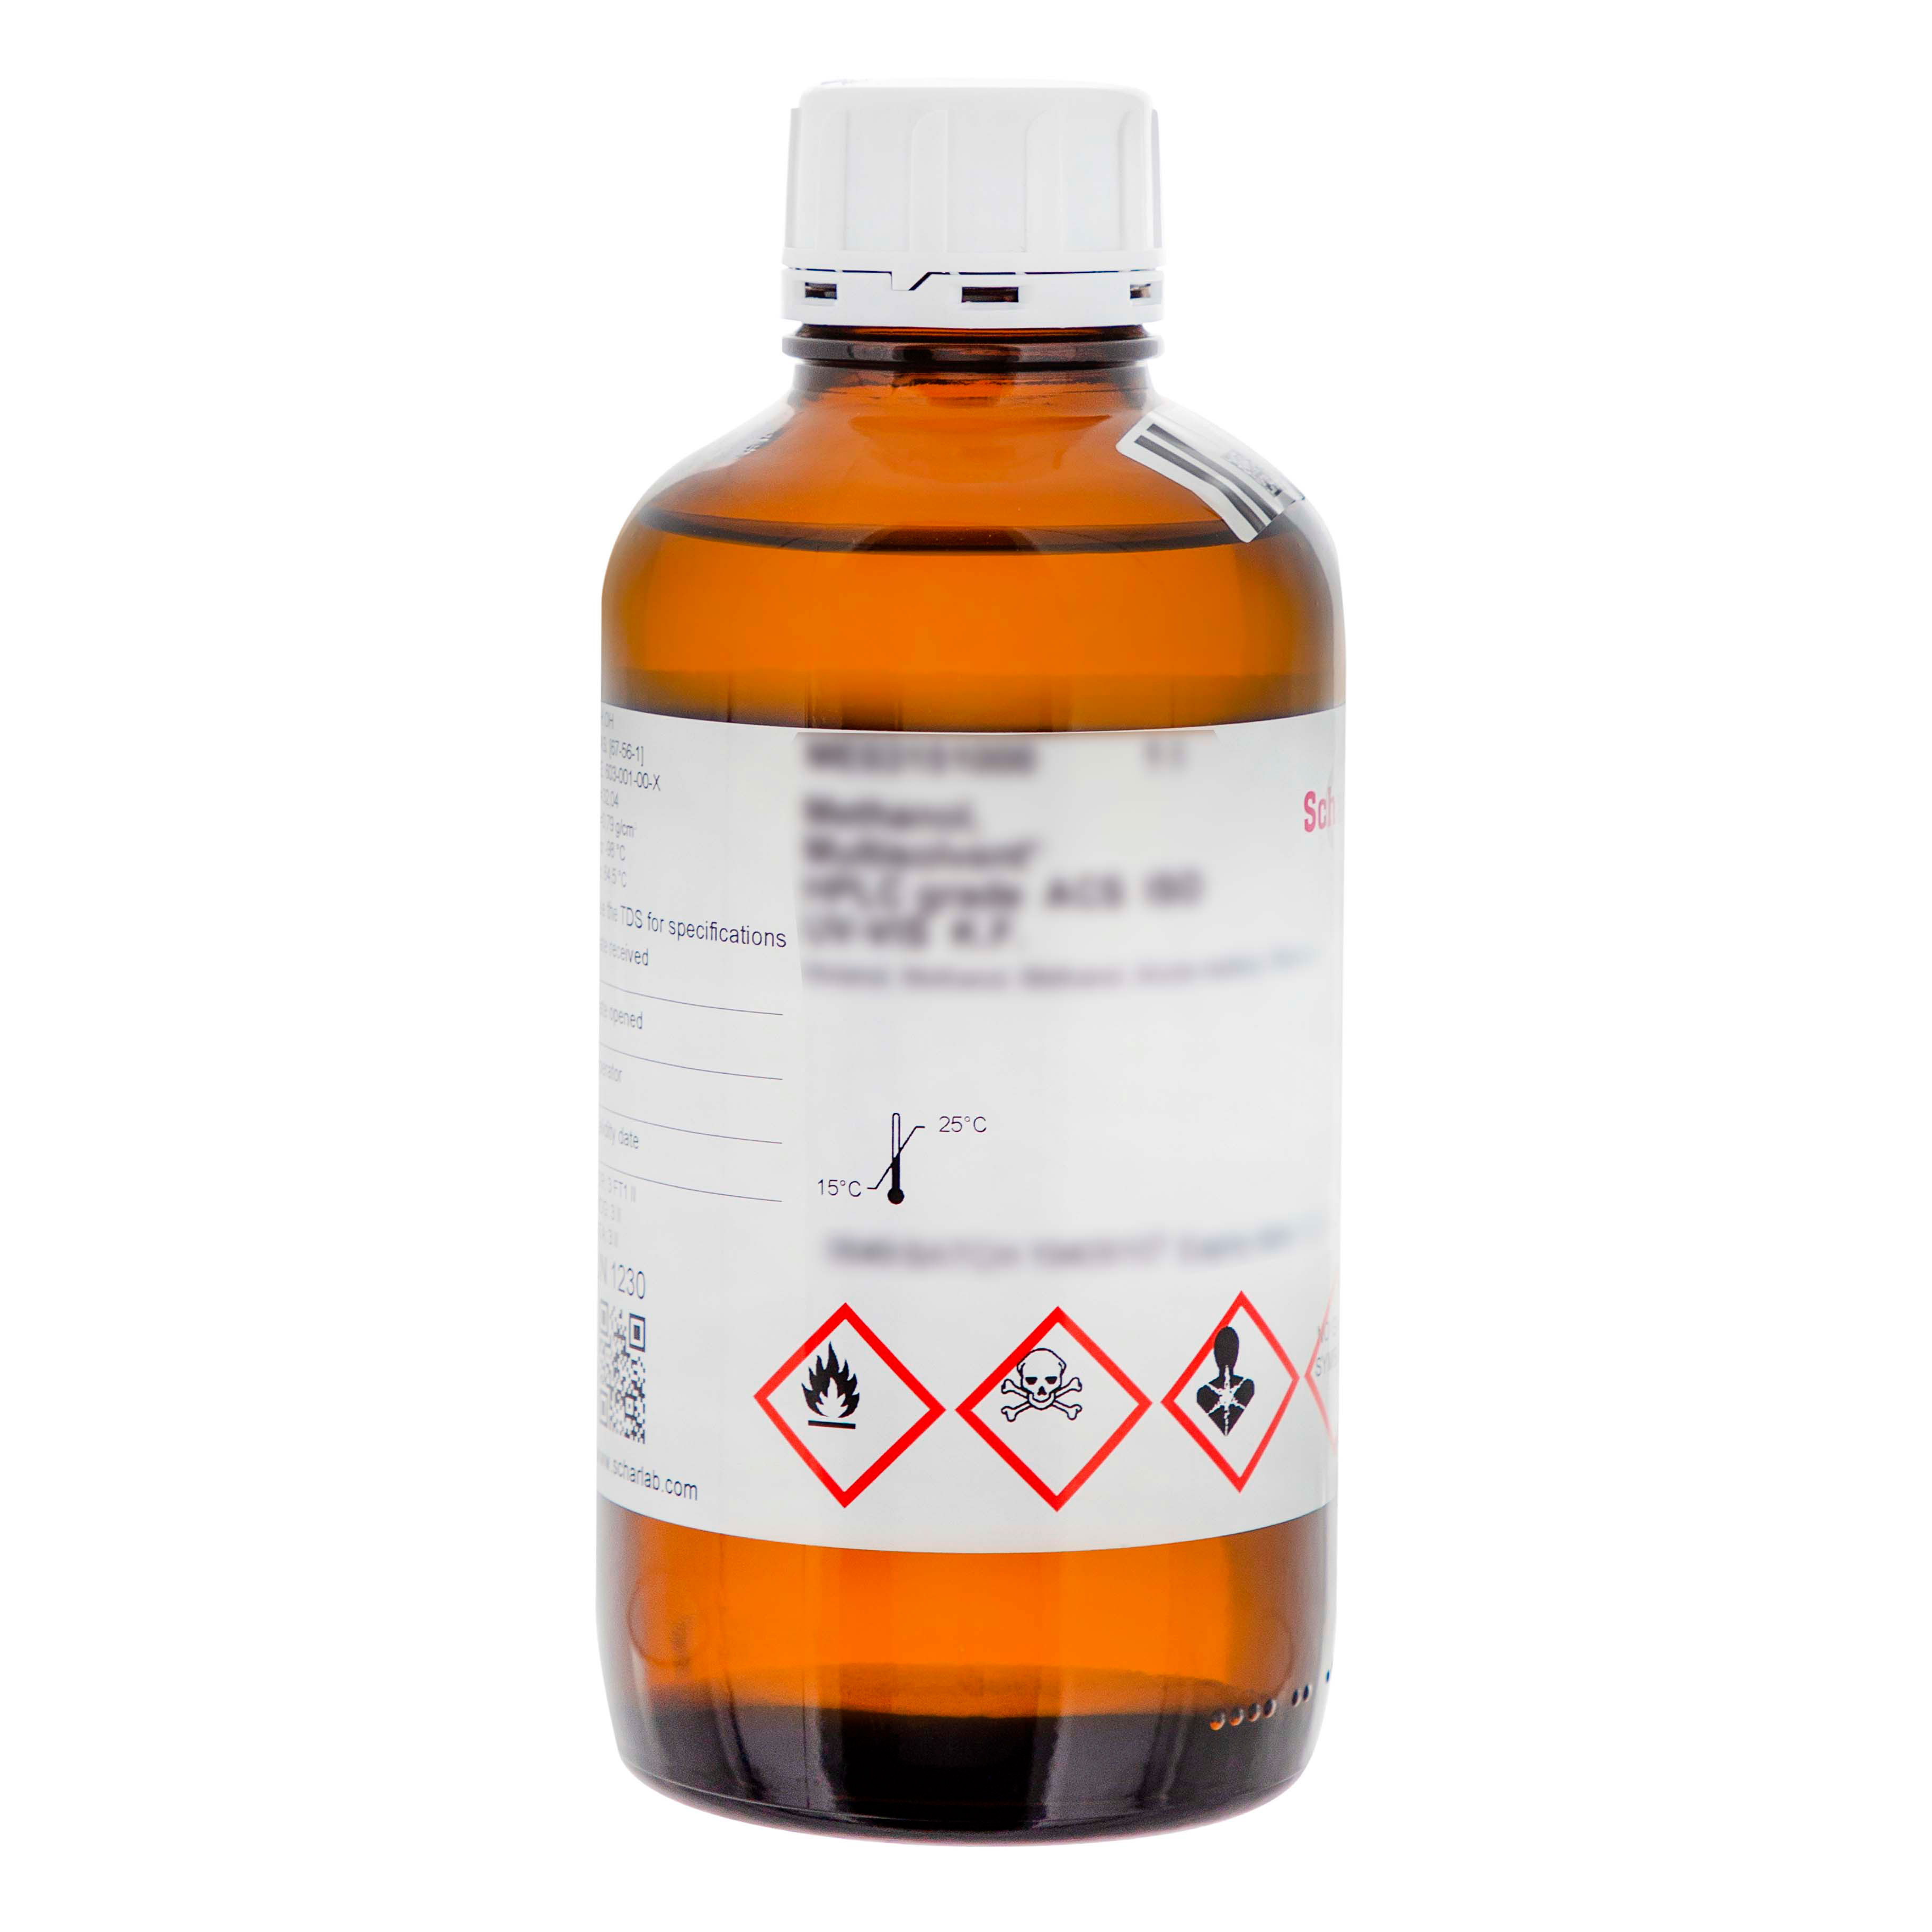 Éter dietílico, seco (máx. 0,0075% H2O), para análisis, ExpertQ®, estabilizado con aprox. 7 ppm de 2,6-Di-terc-butil-4-metilfenol (BHT)